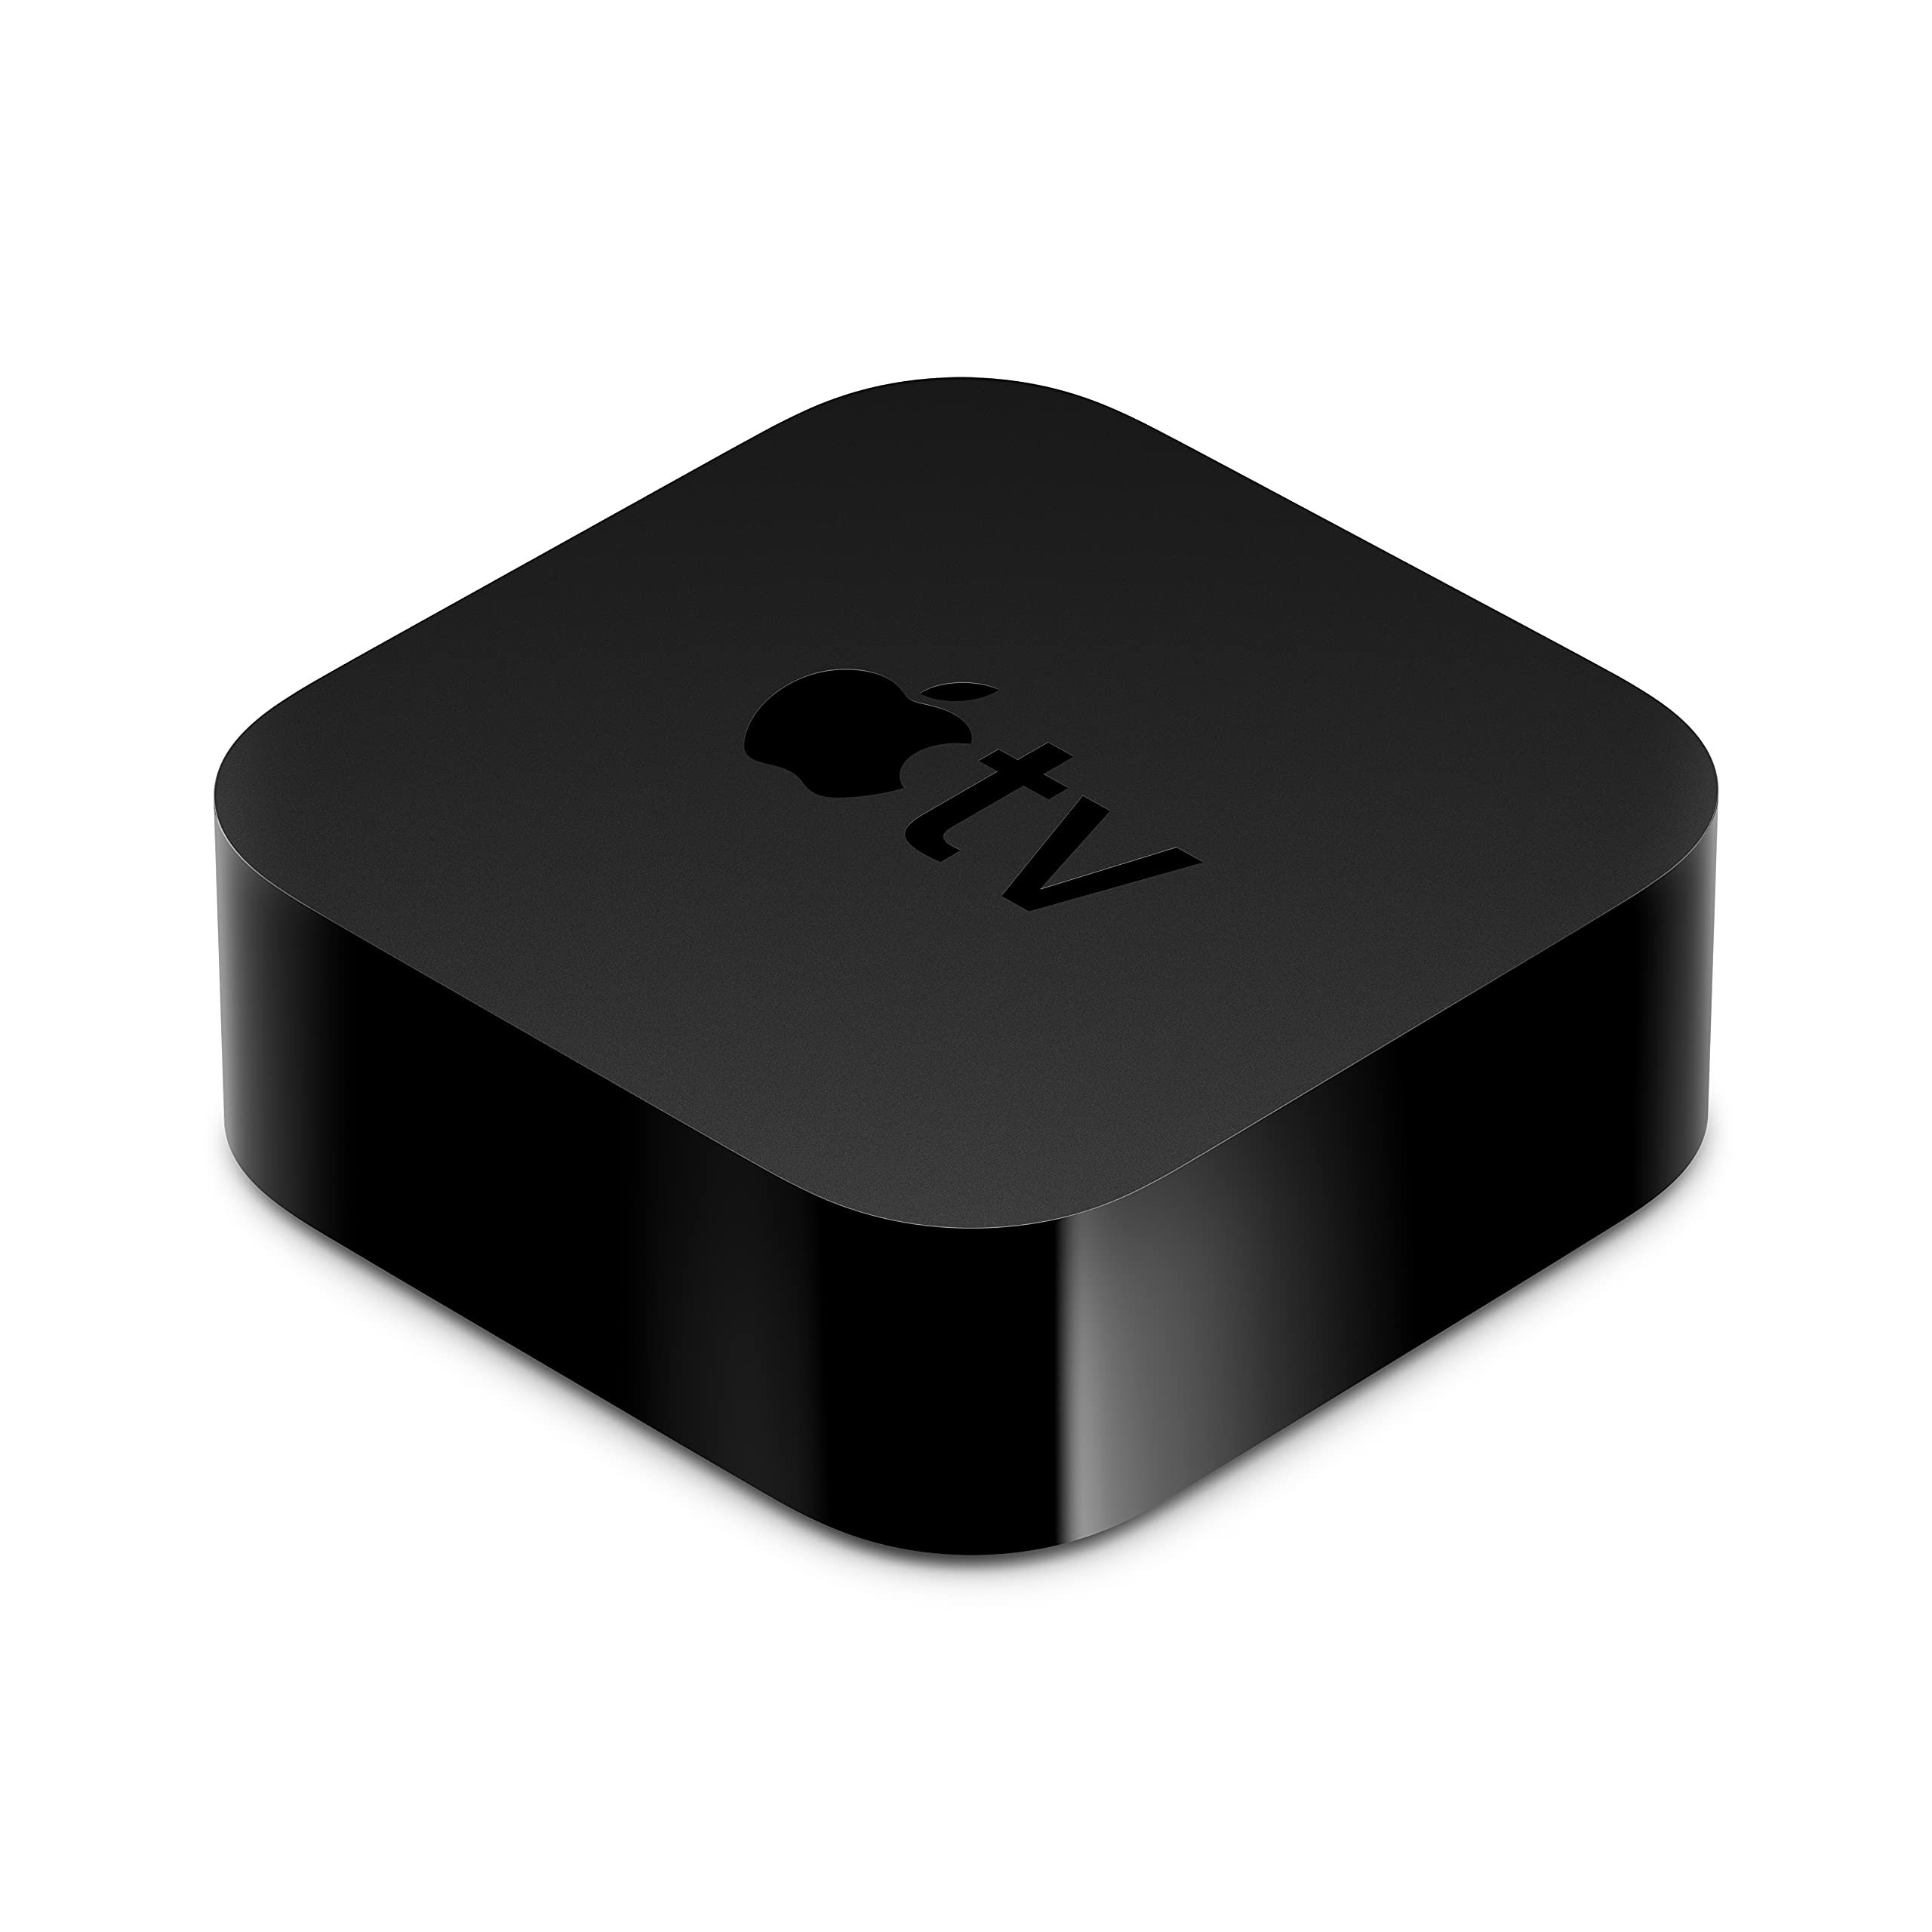 2021 Apple TV 4K with 32GB Storage (2nd Generation)